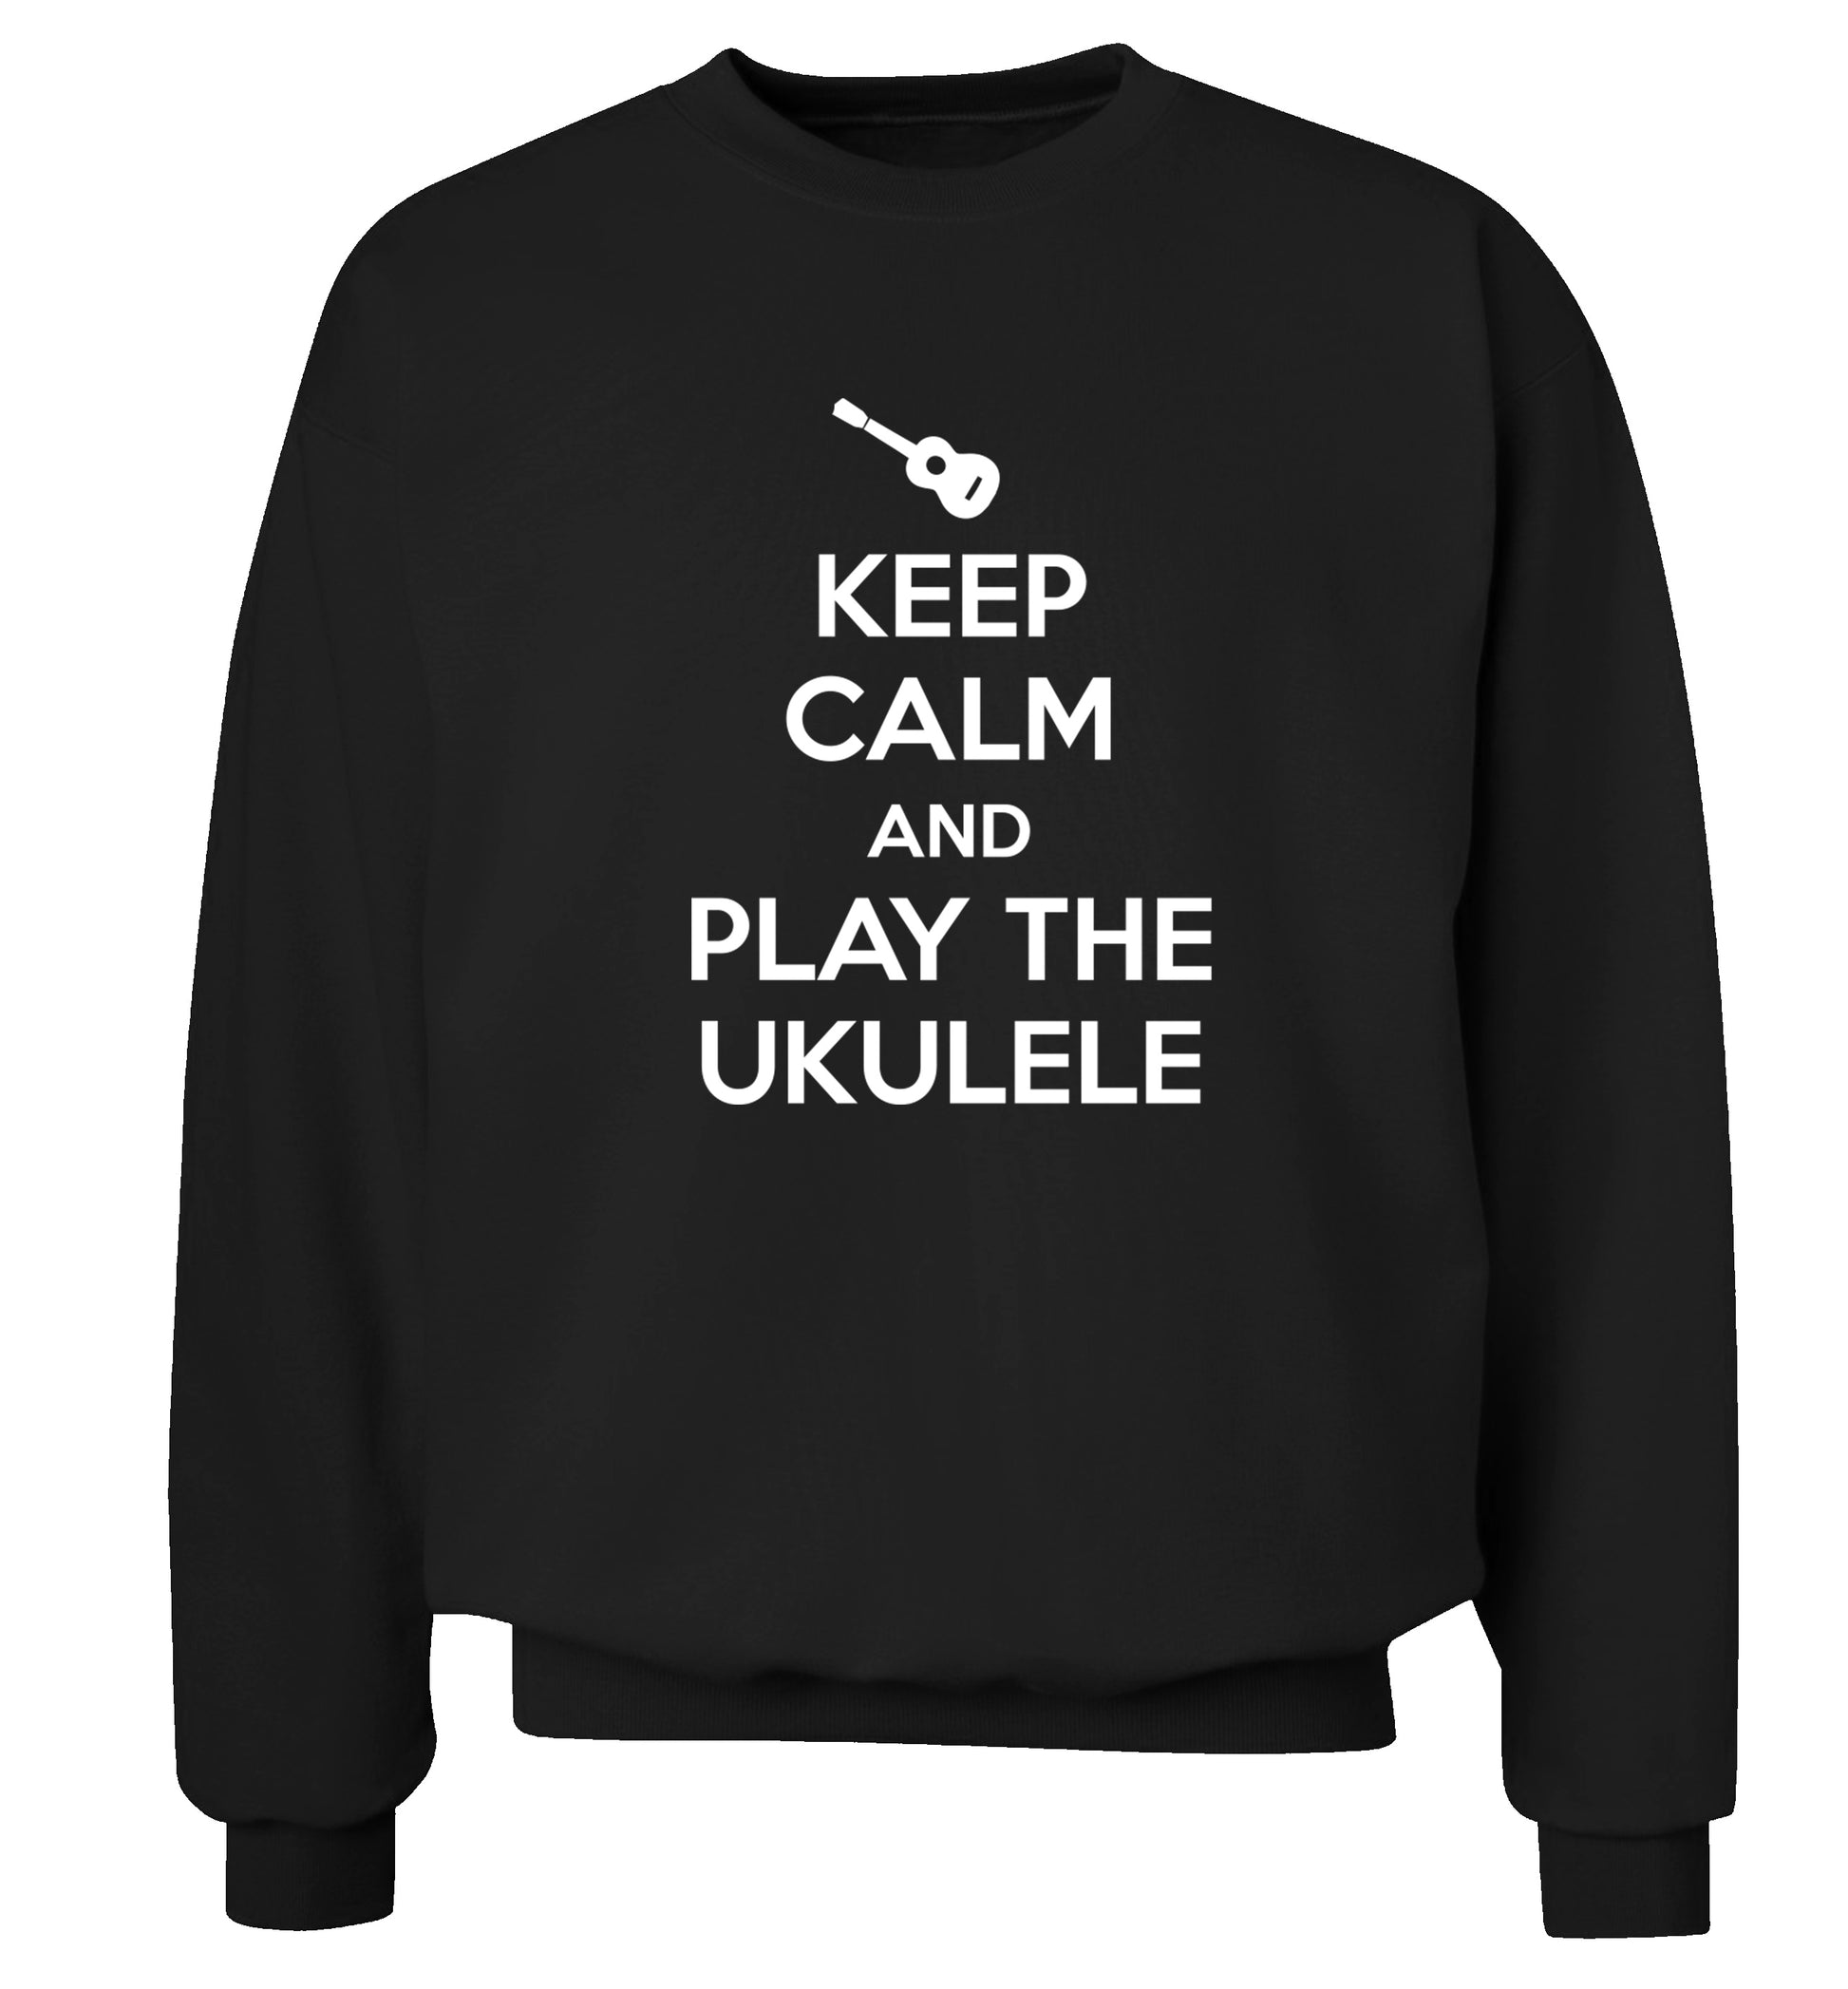 Keep calm and play the ukulele Adult's unisex black Sweater 2XL